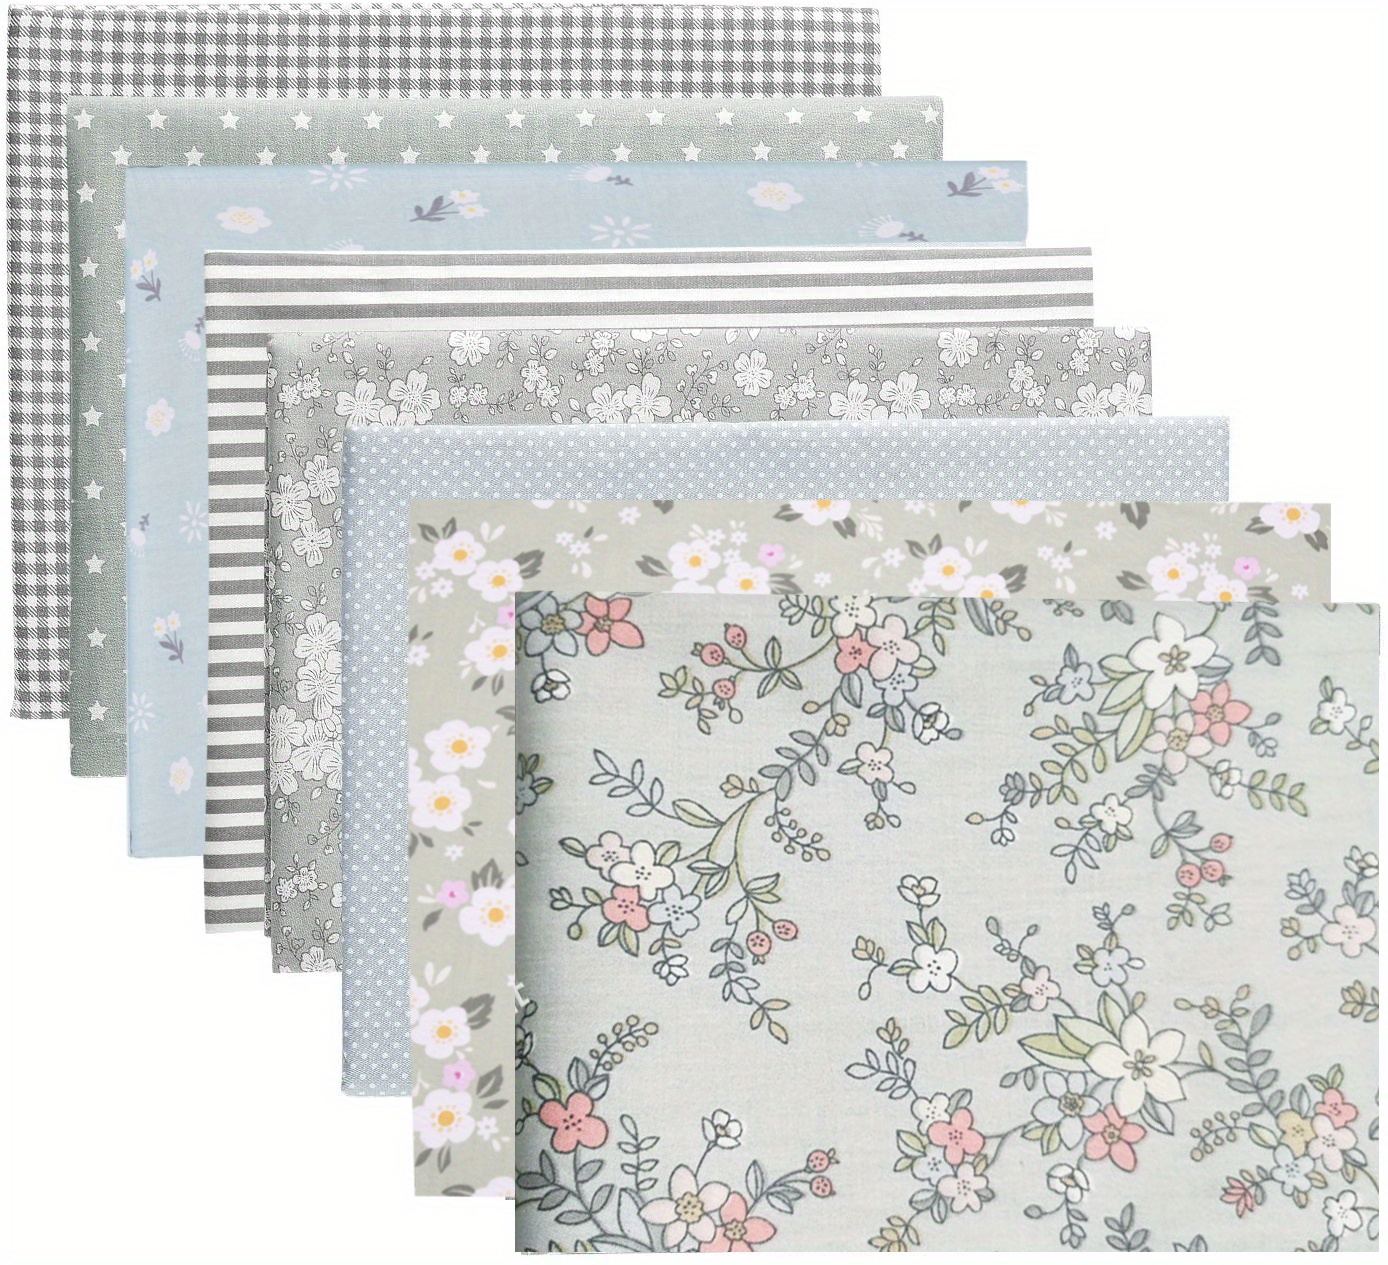 Cartisanat Fat Quarters Fabric Bundles,12 Pcs (20in x 20in / 50cm x 50cm) Sewing Patterns Quarter Precut Fabrics for Quilting Squares Scraps Top